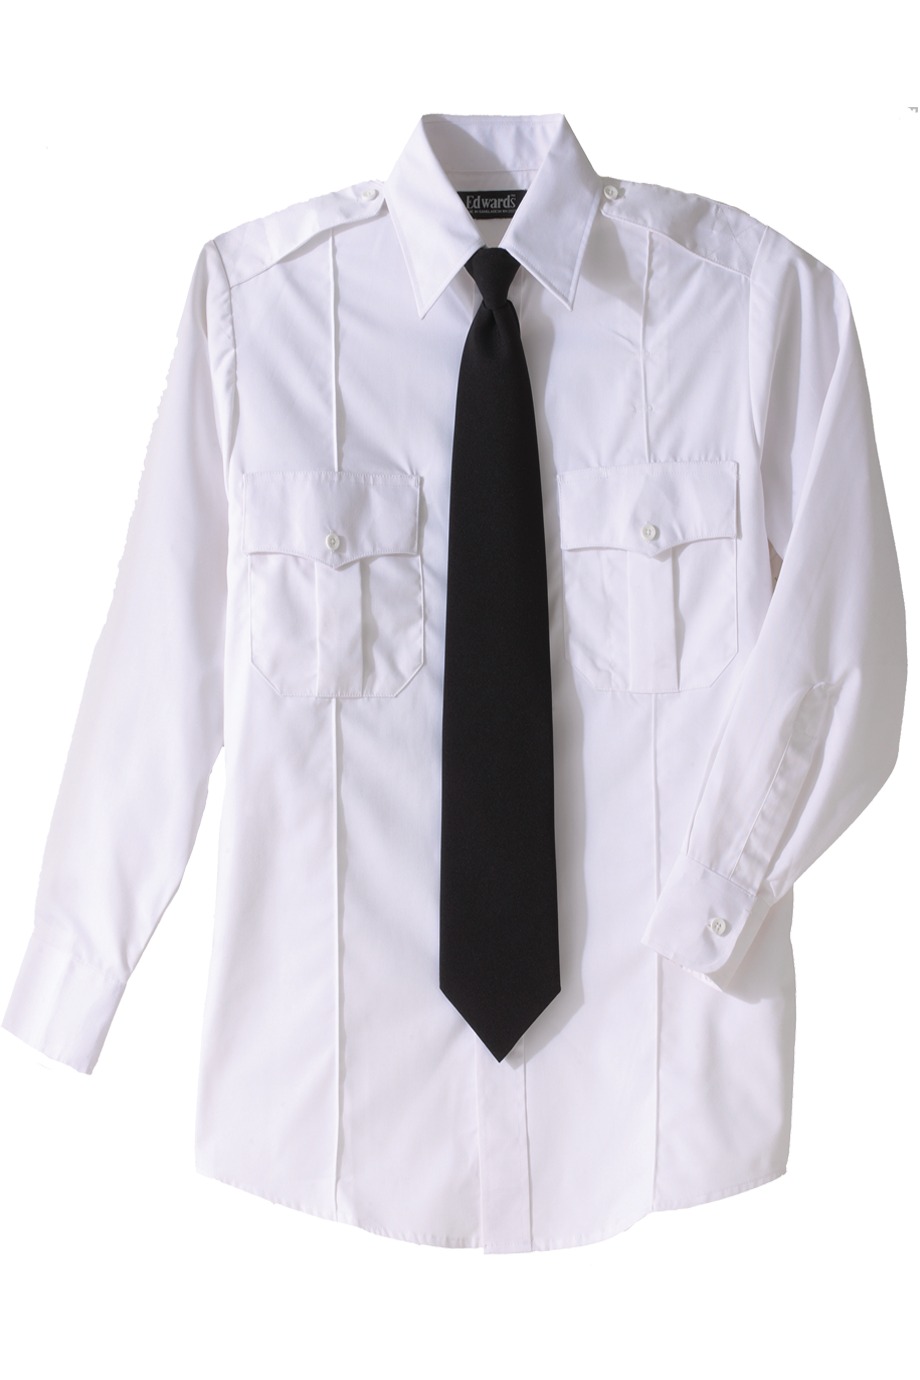 Edwards Garment 1276 - Security Long Sleeve Shirt Polyester/Cotton Blend